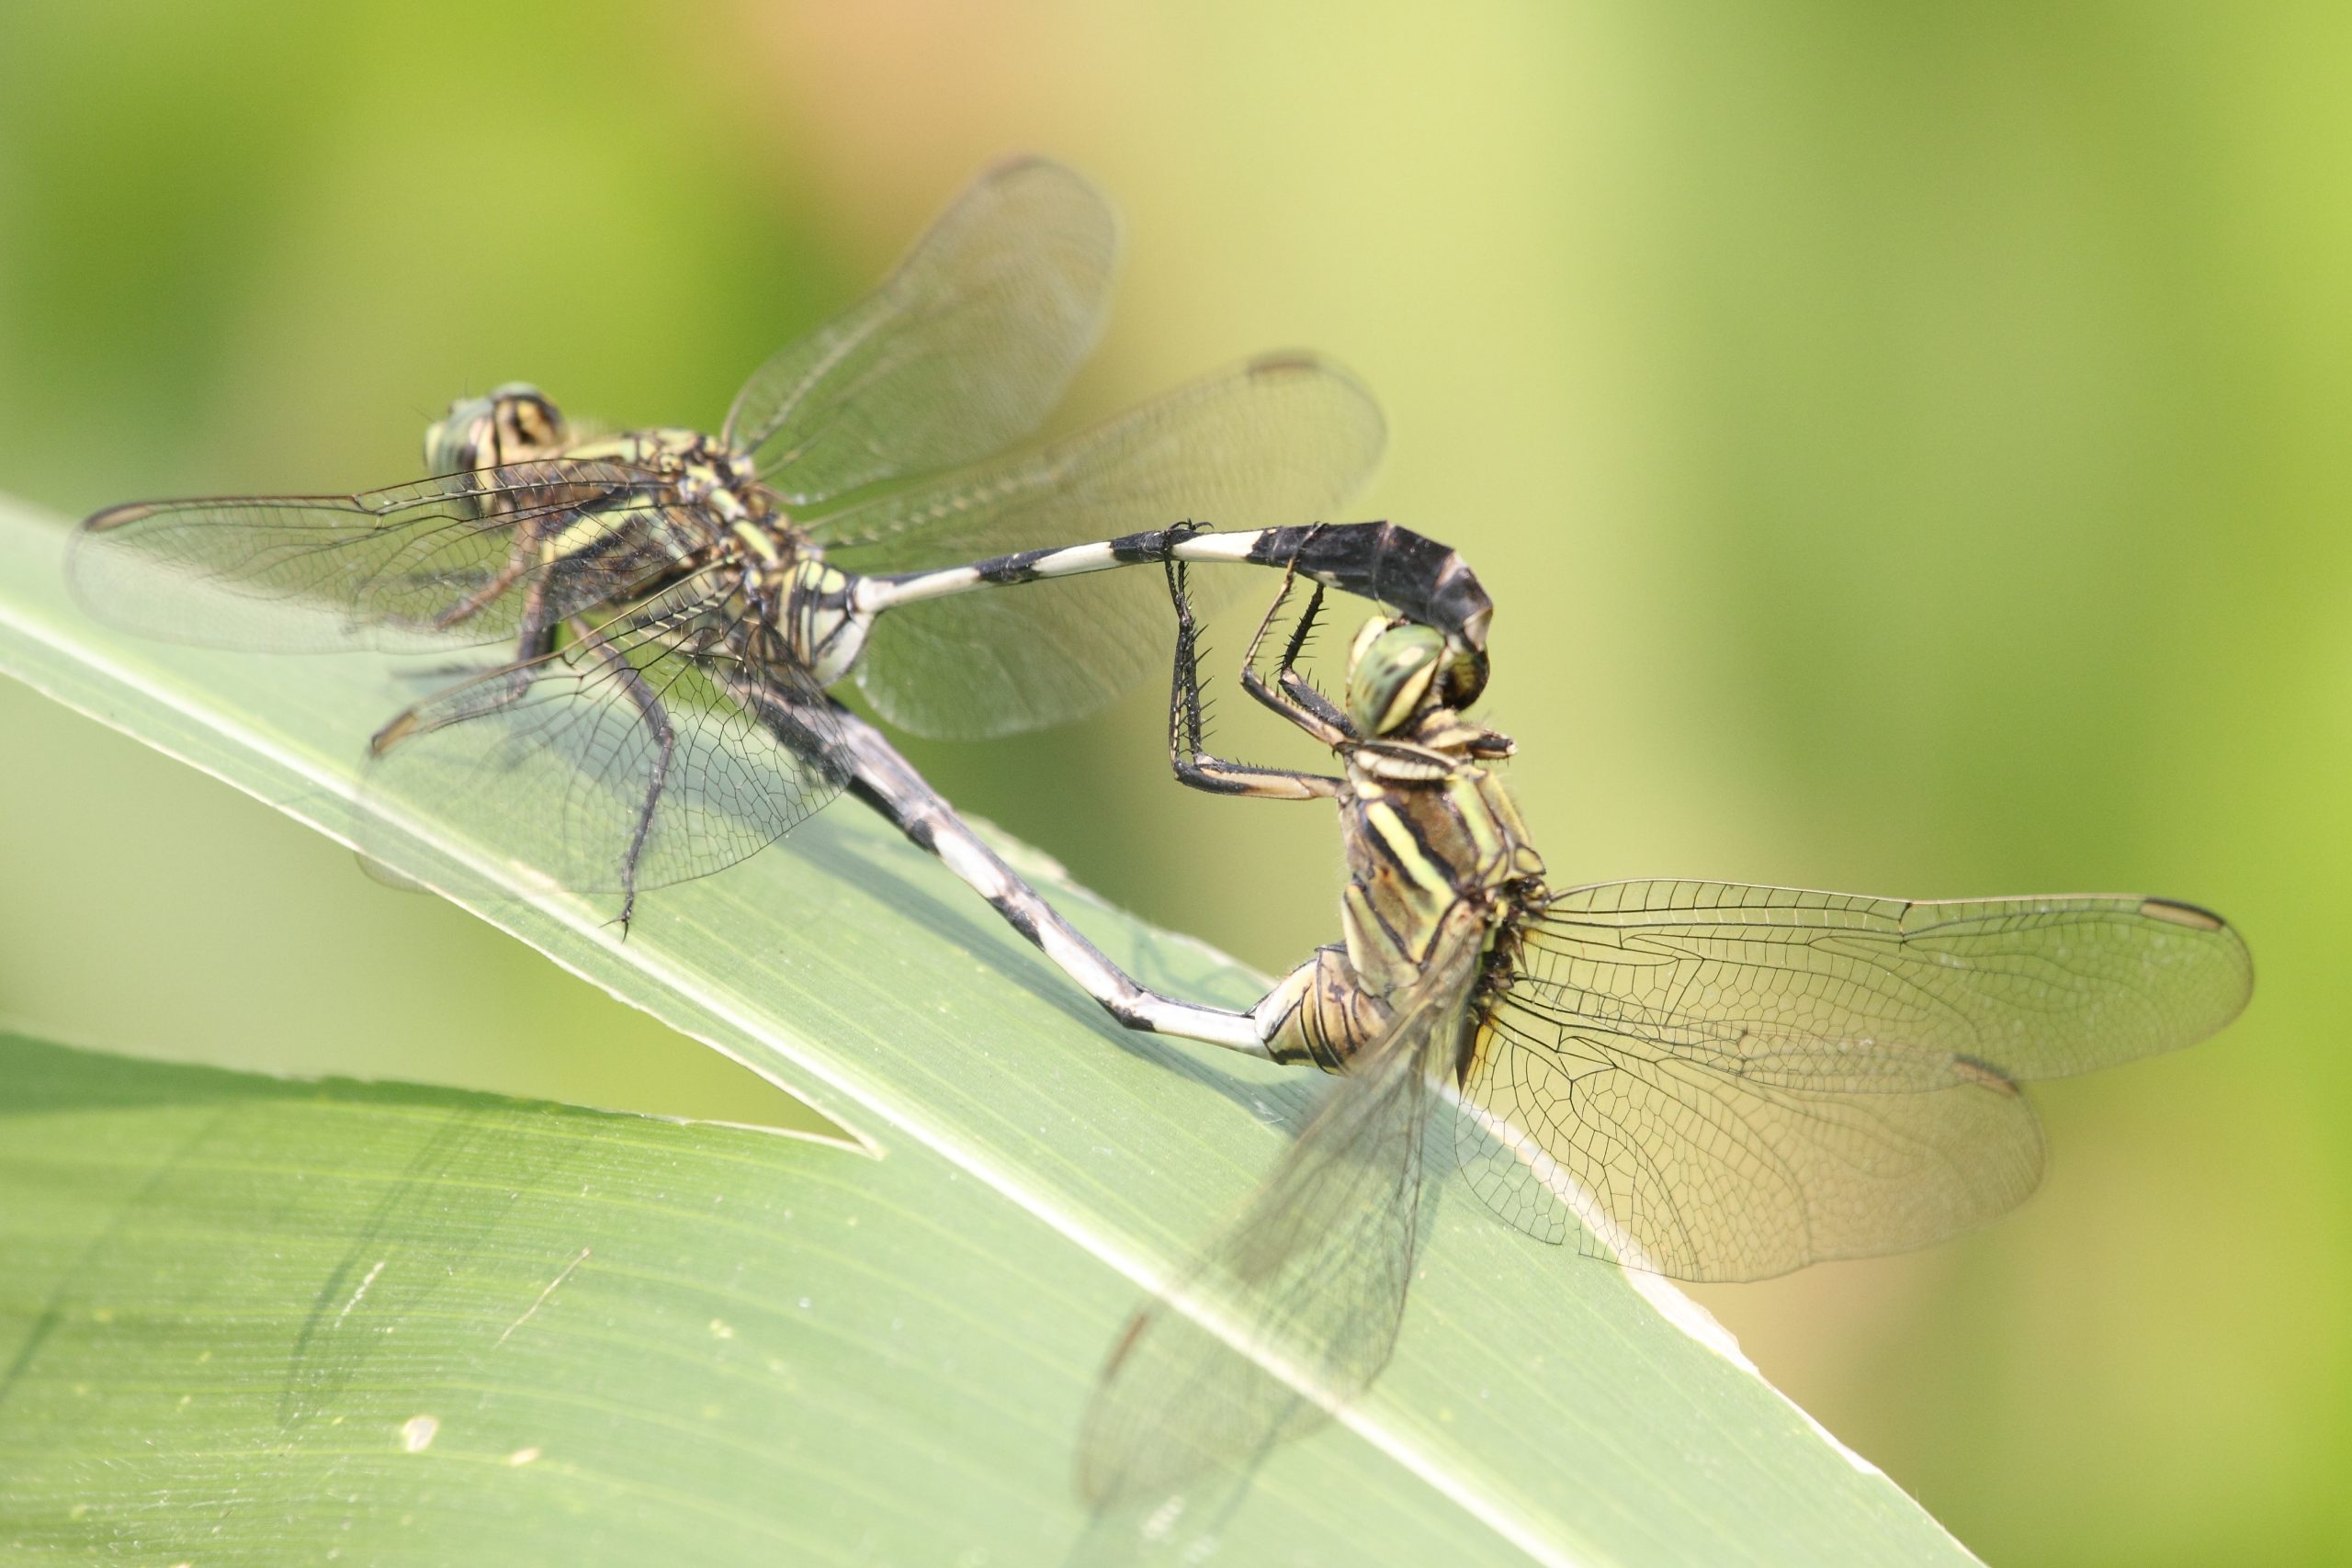 Dragonfly mating